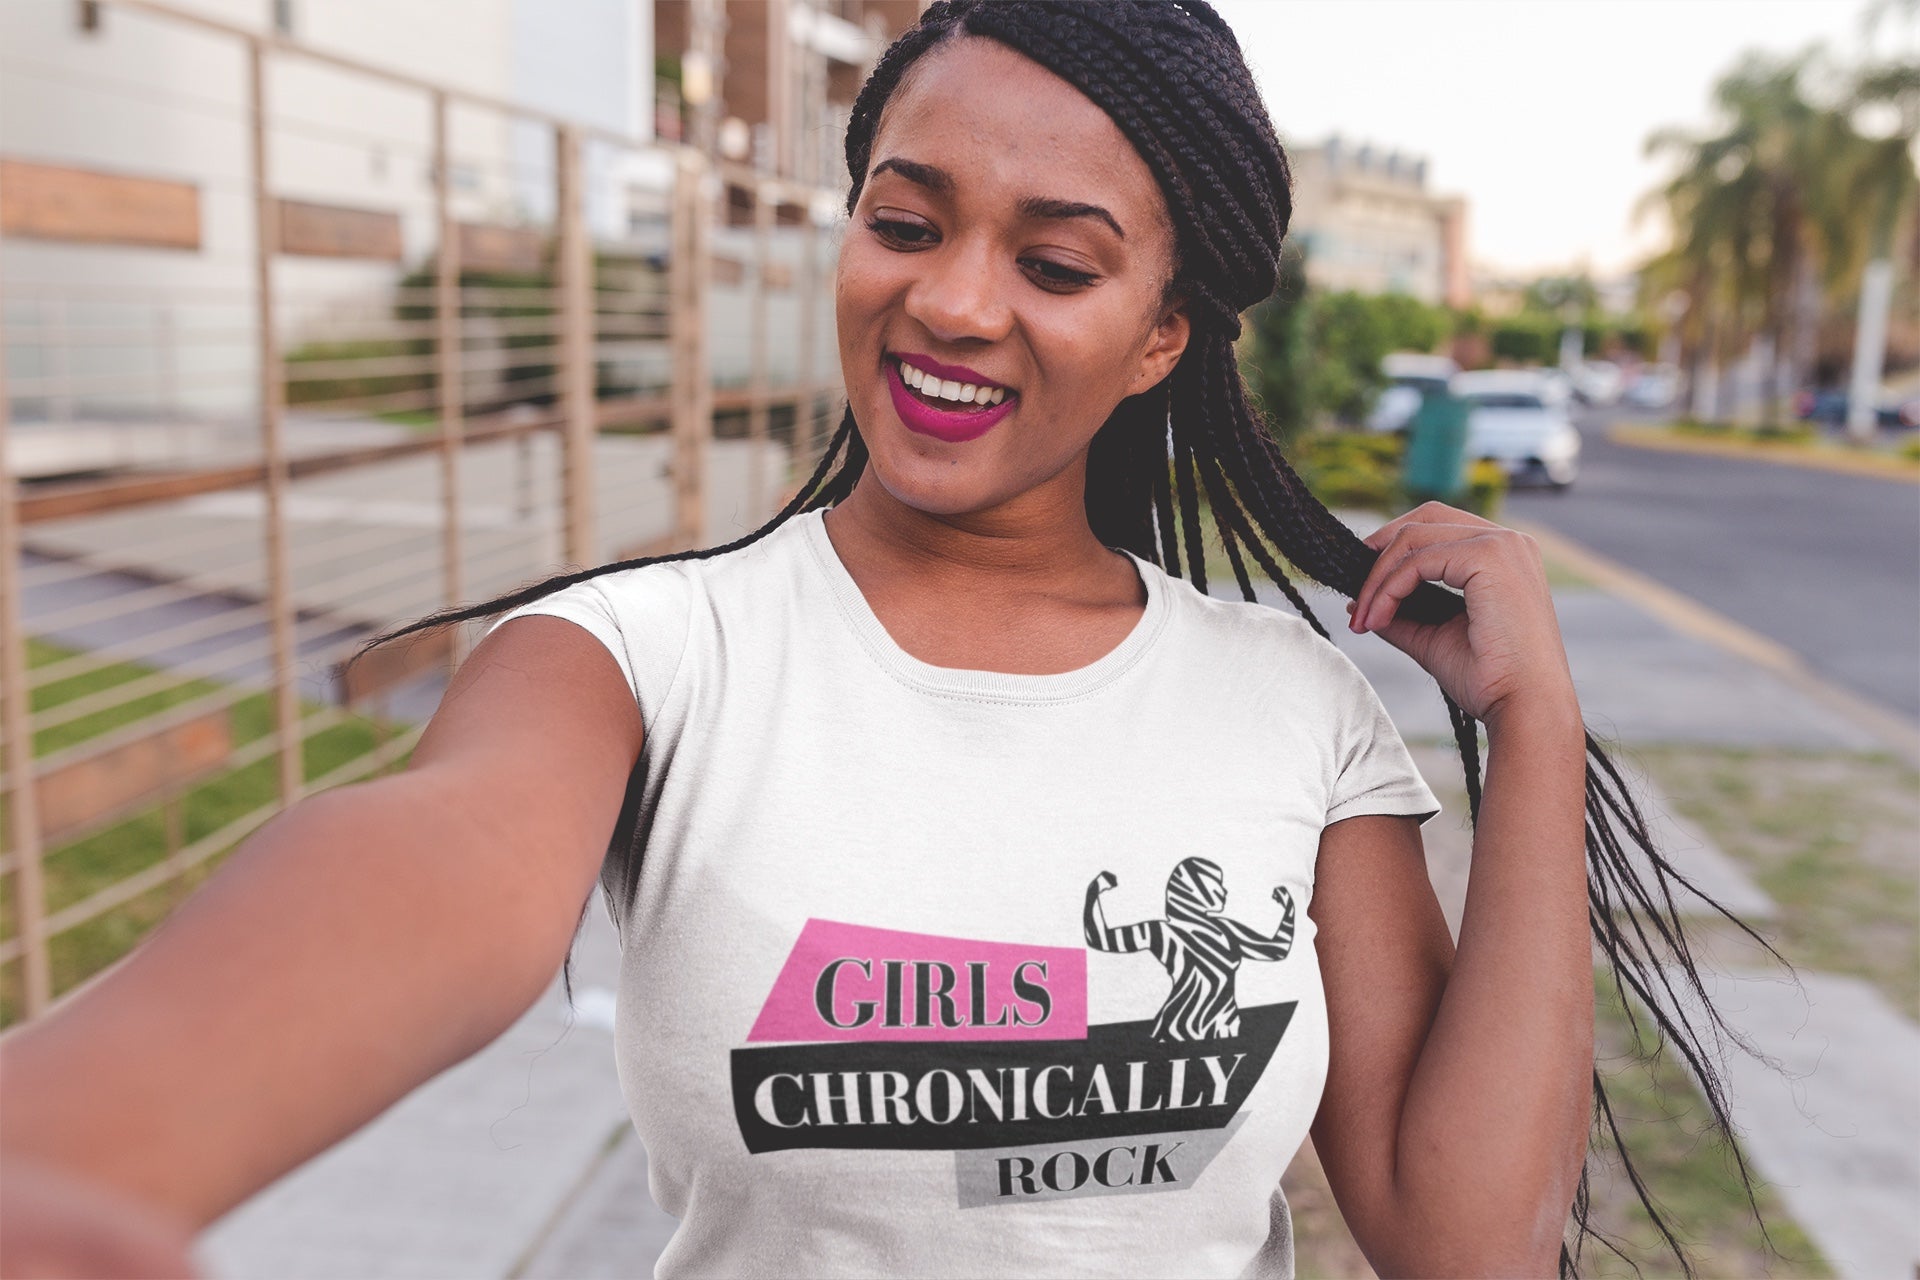 Model wearing a t-shirt that reads "Girls chronically rock"